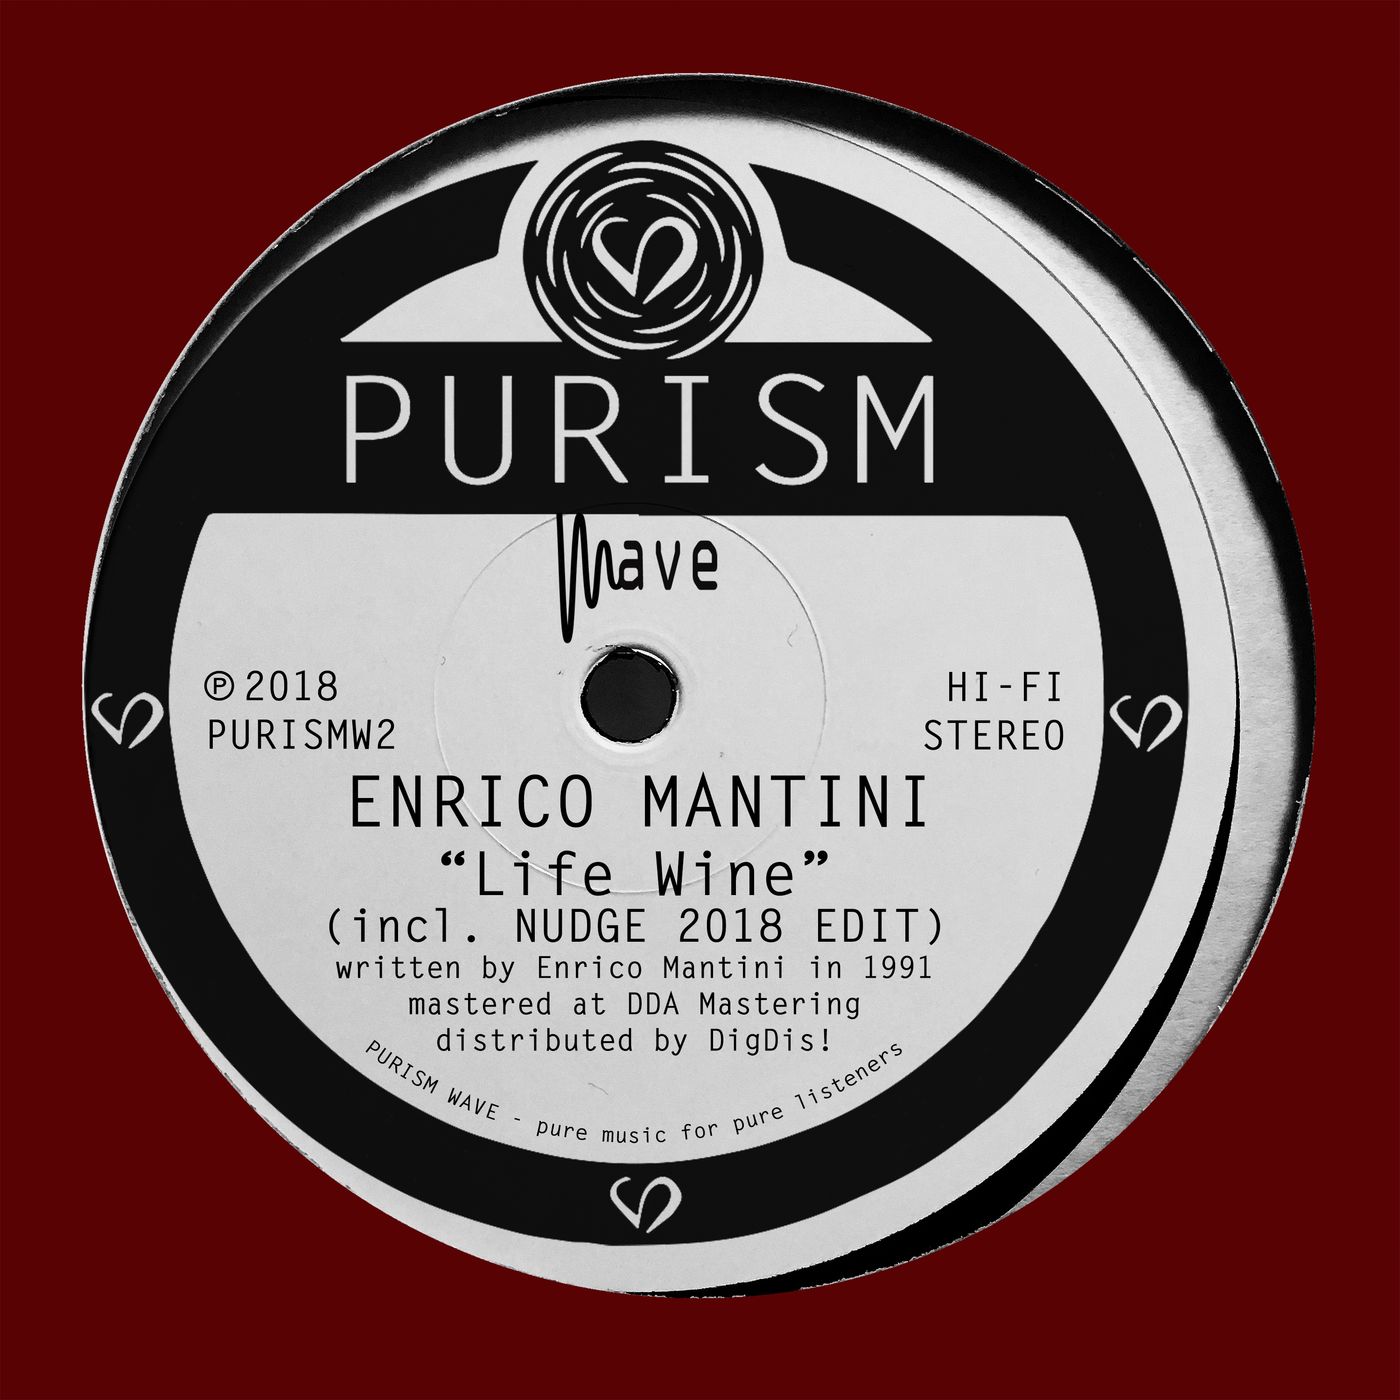 Enrico Mantini - Life Wine (1991 Unreleased) / PURISM Wave